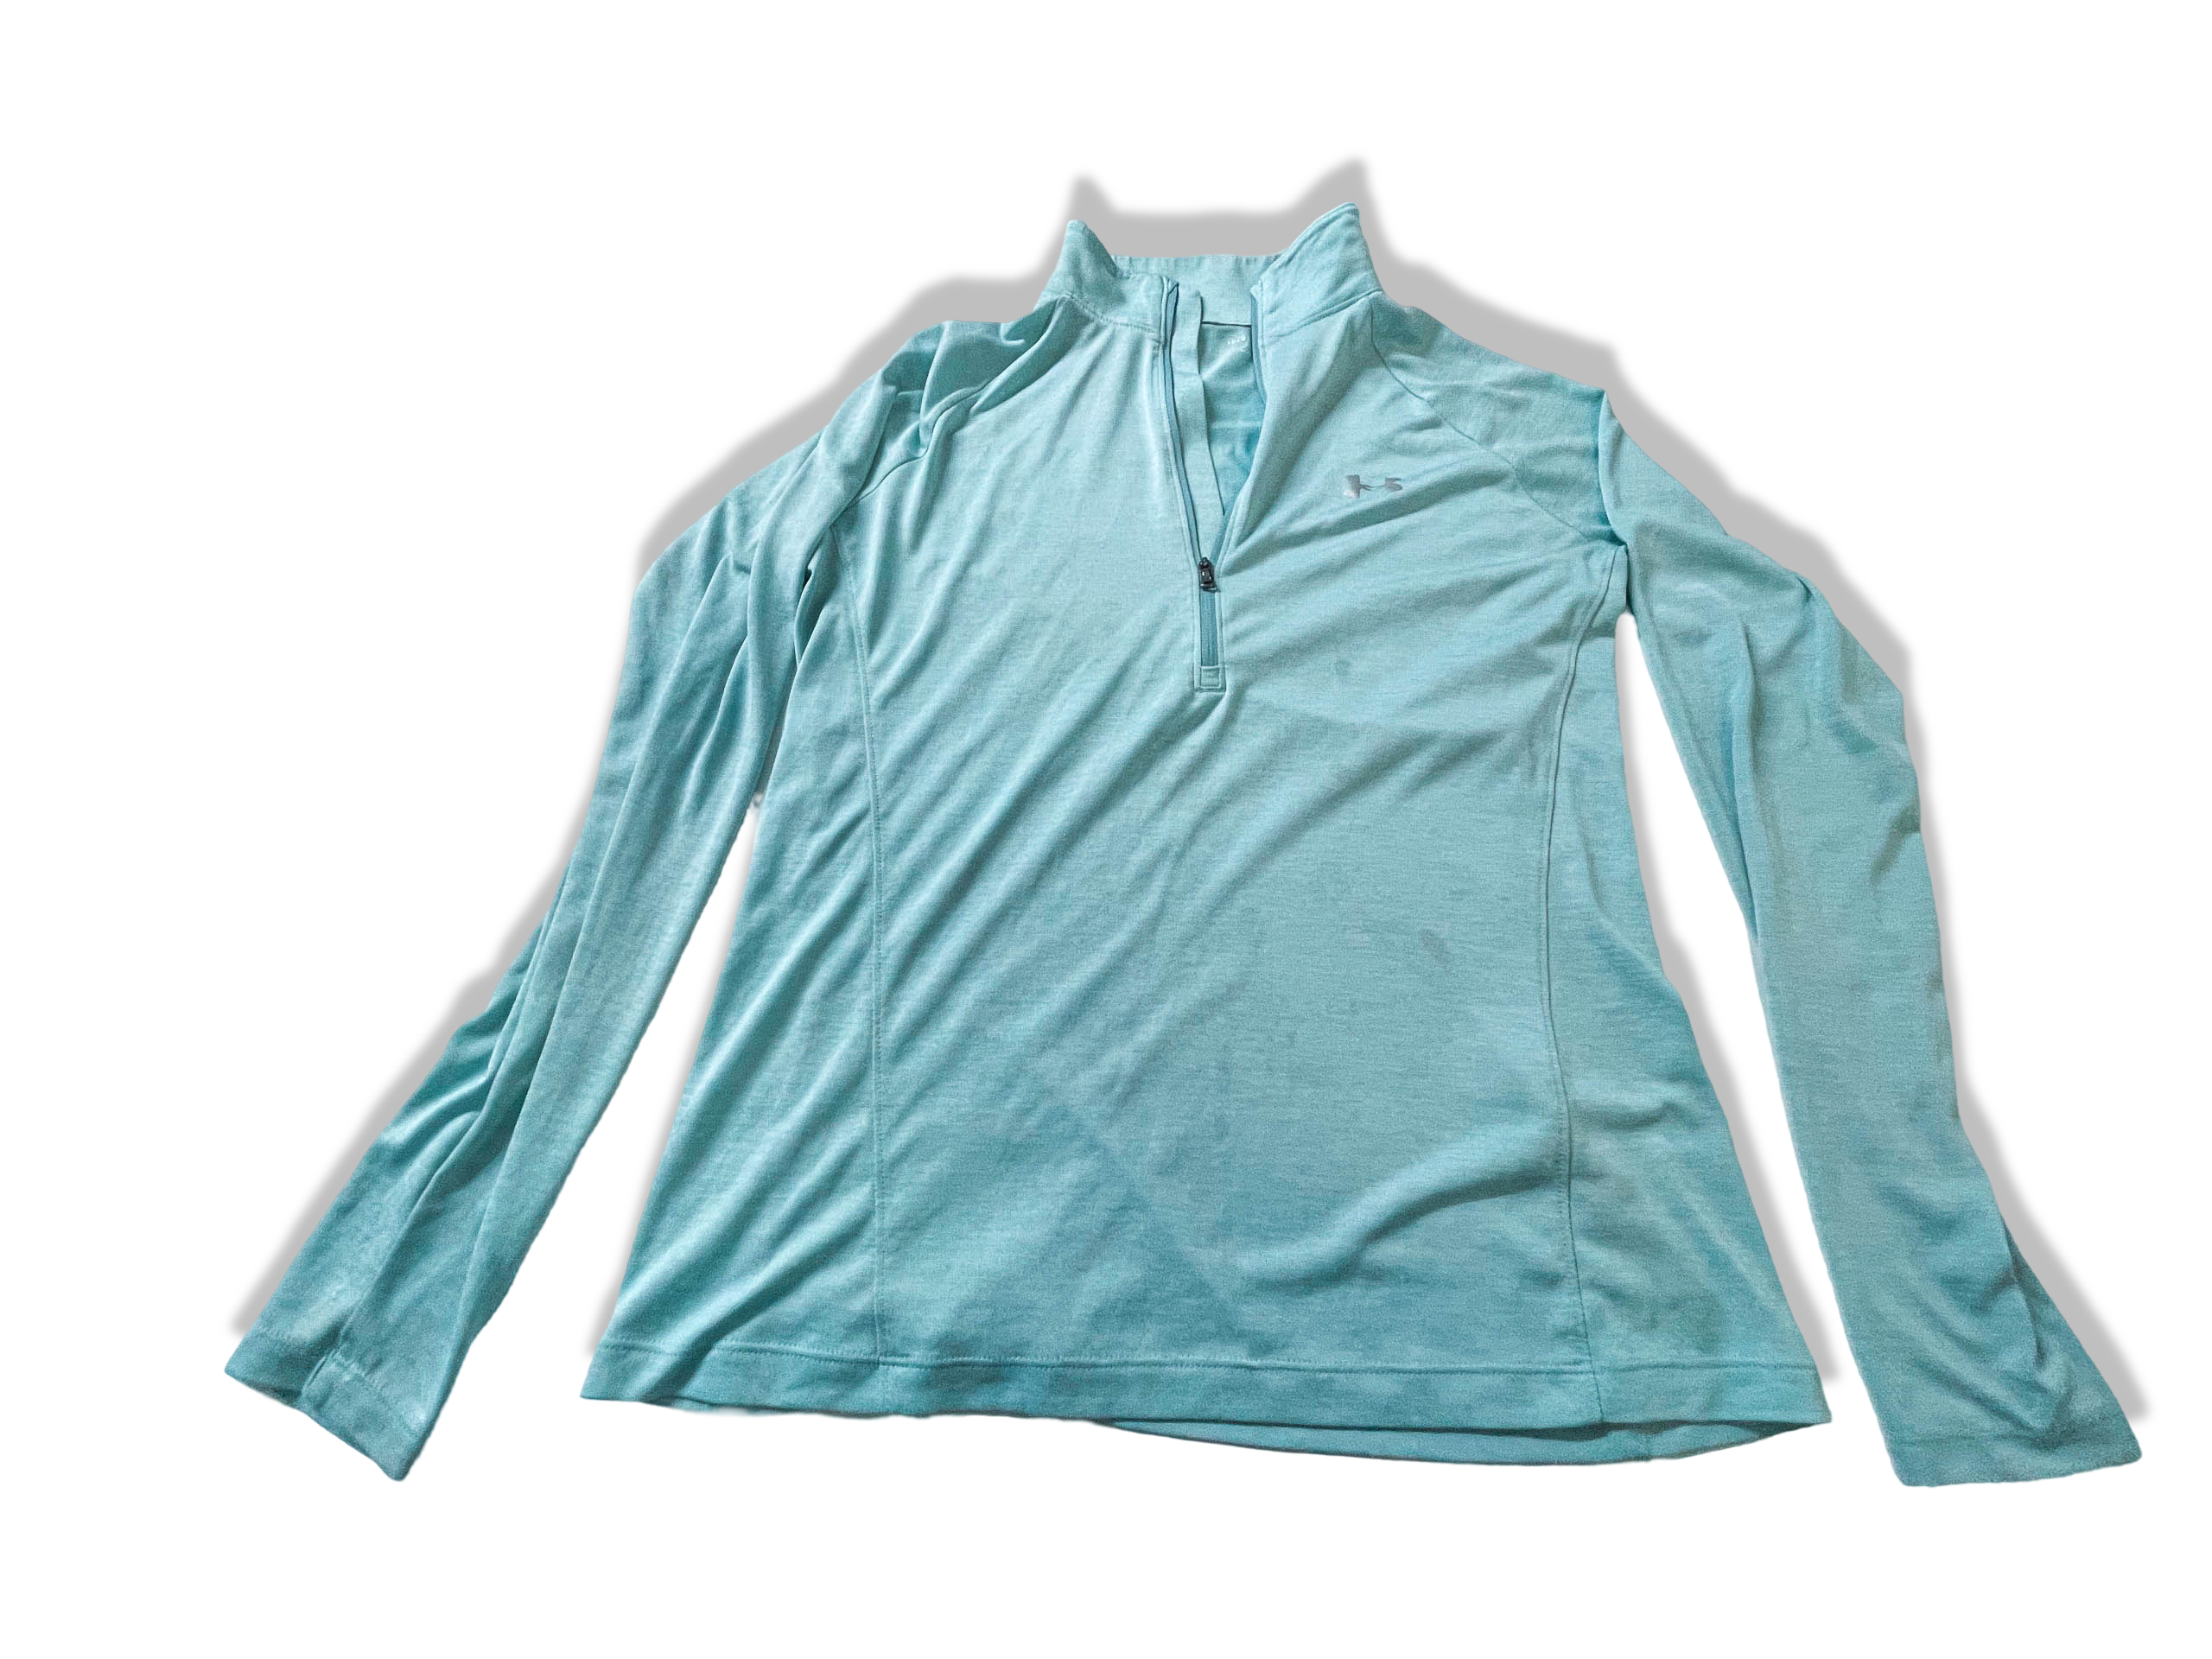 Vintage women's Under Armour 1/4 zip high neck blue sweatshirt in L |L26 W18|SKU 3960